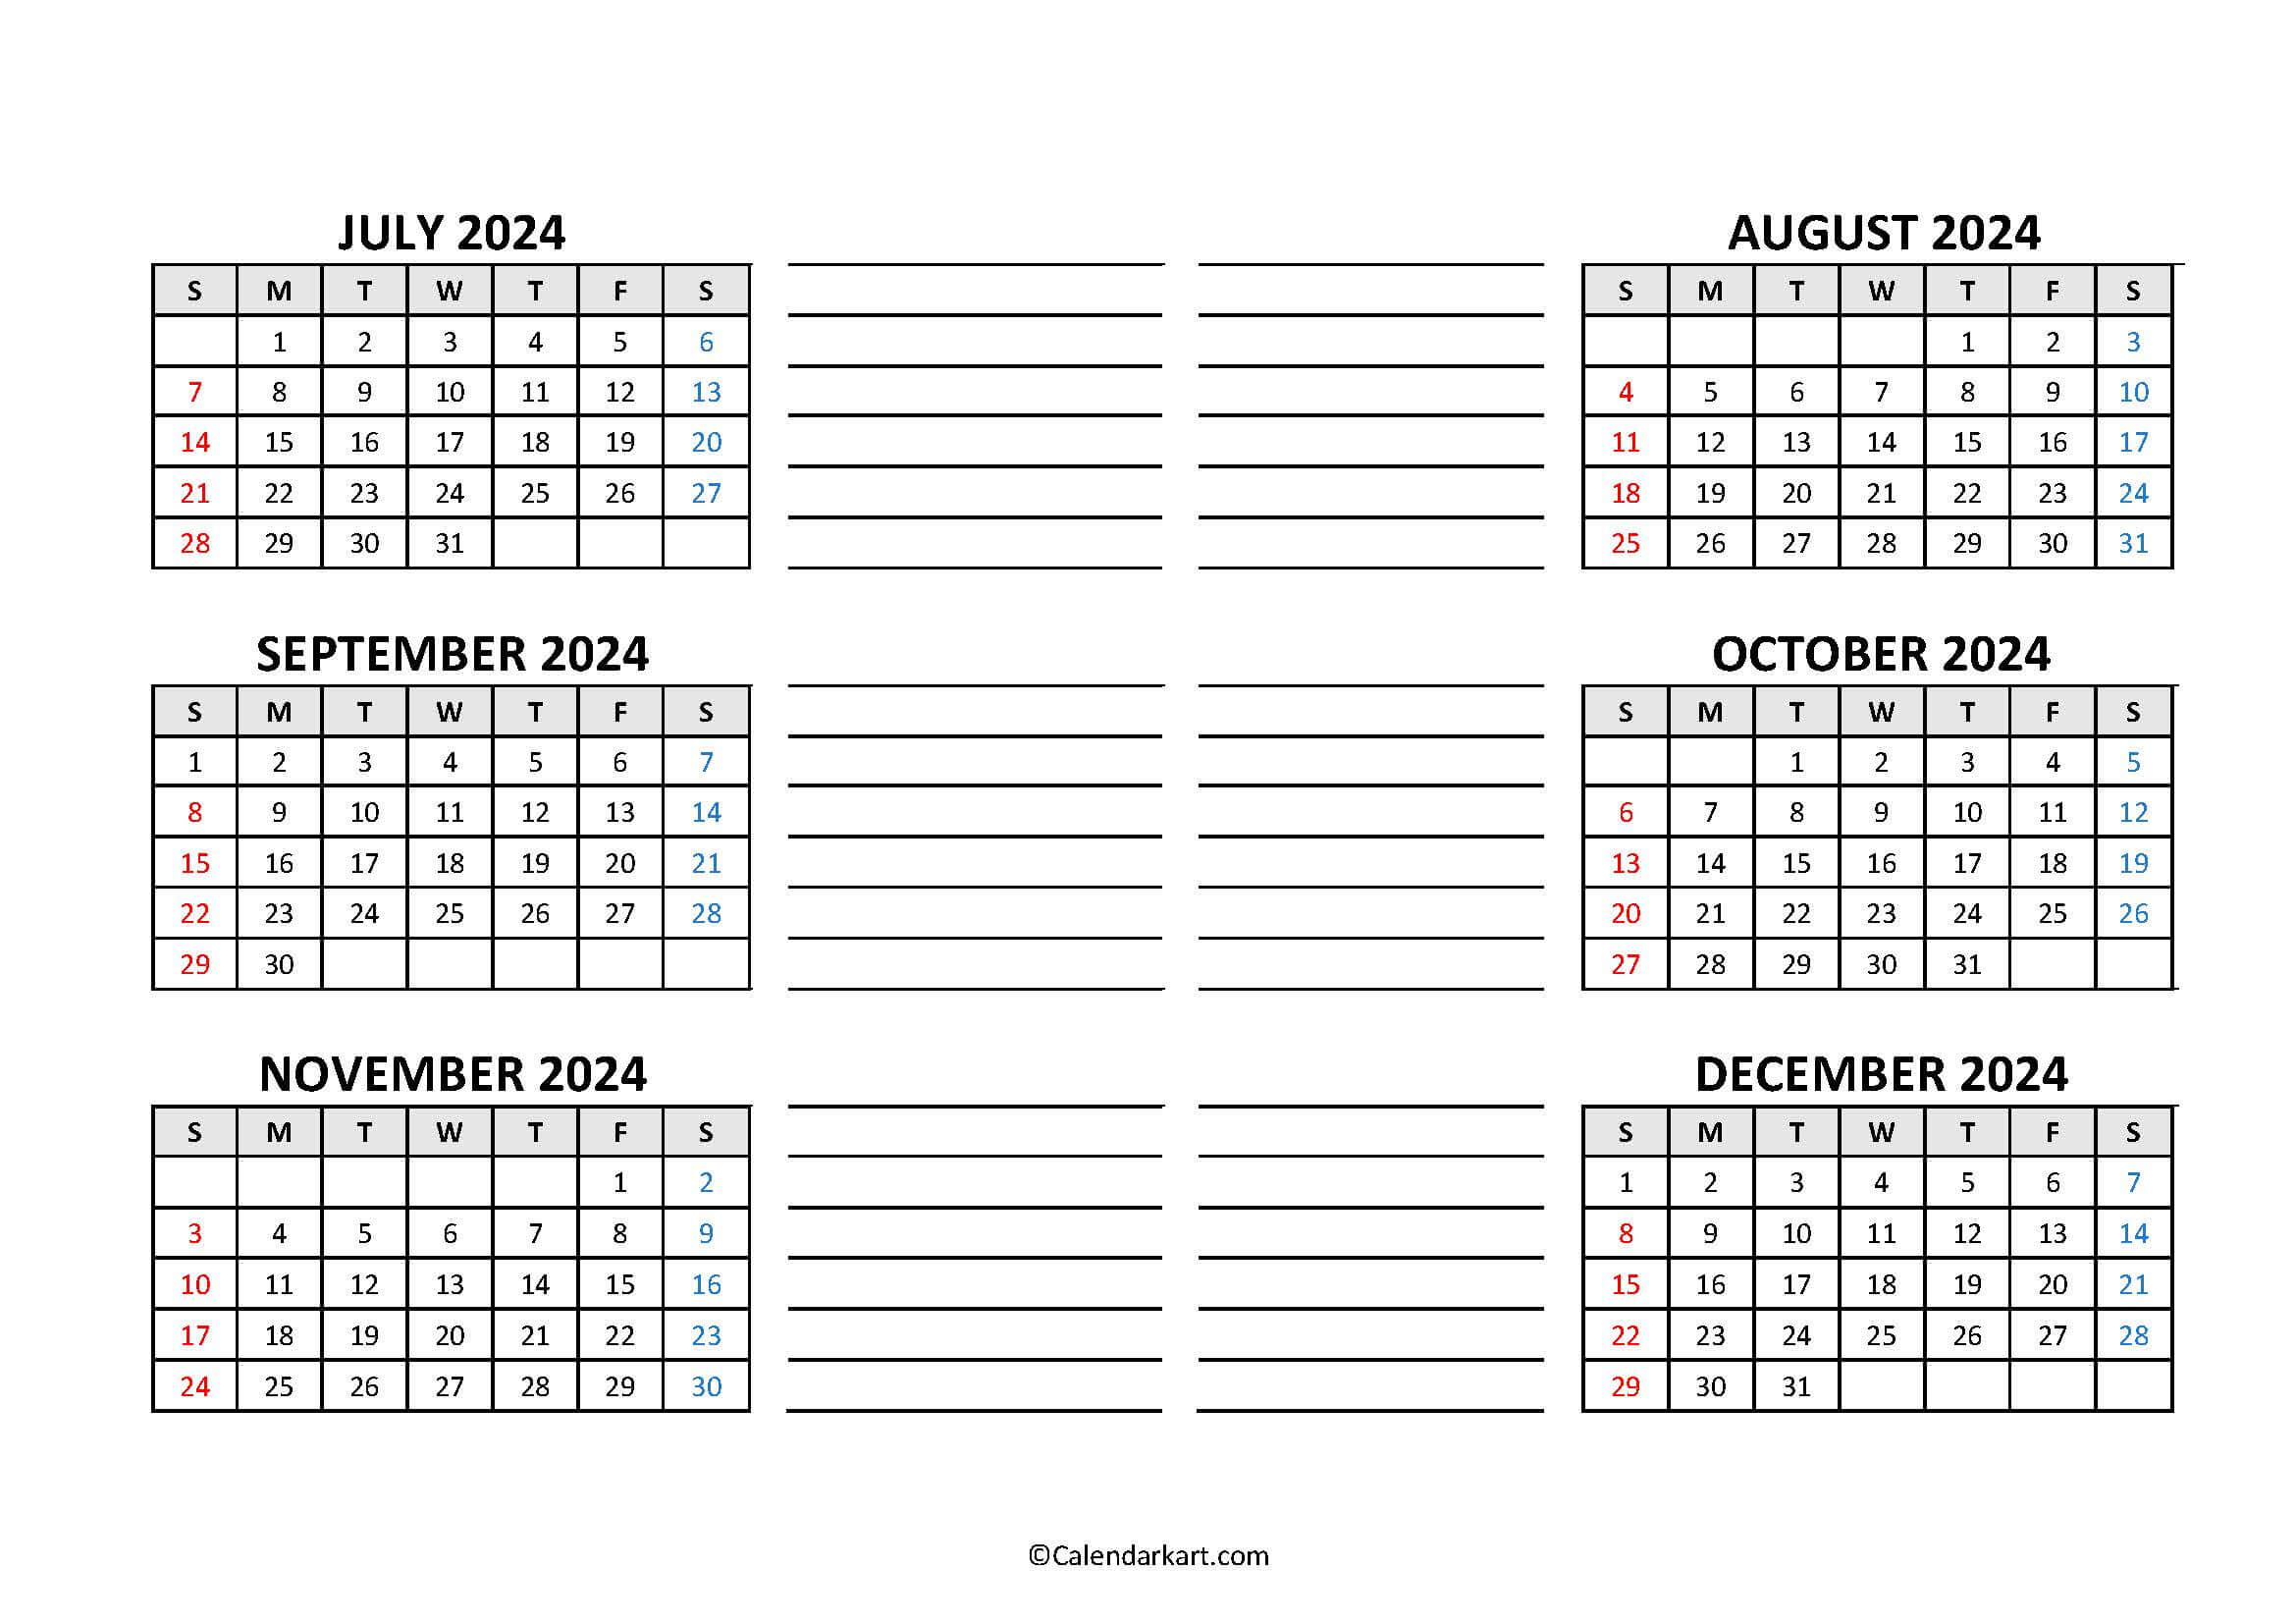 Free Printable Year At A Glance Calendar 2024 - Calendarkart | Calendar 2024 July - Dec